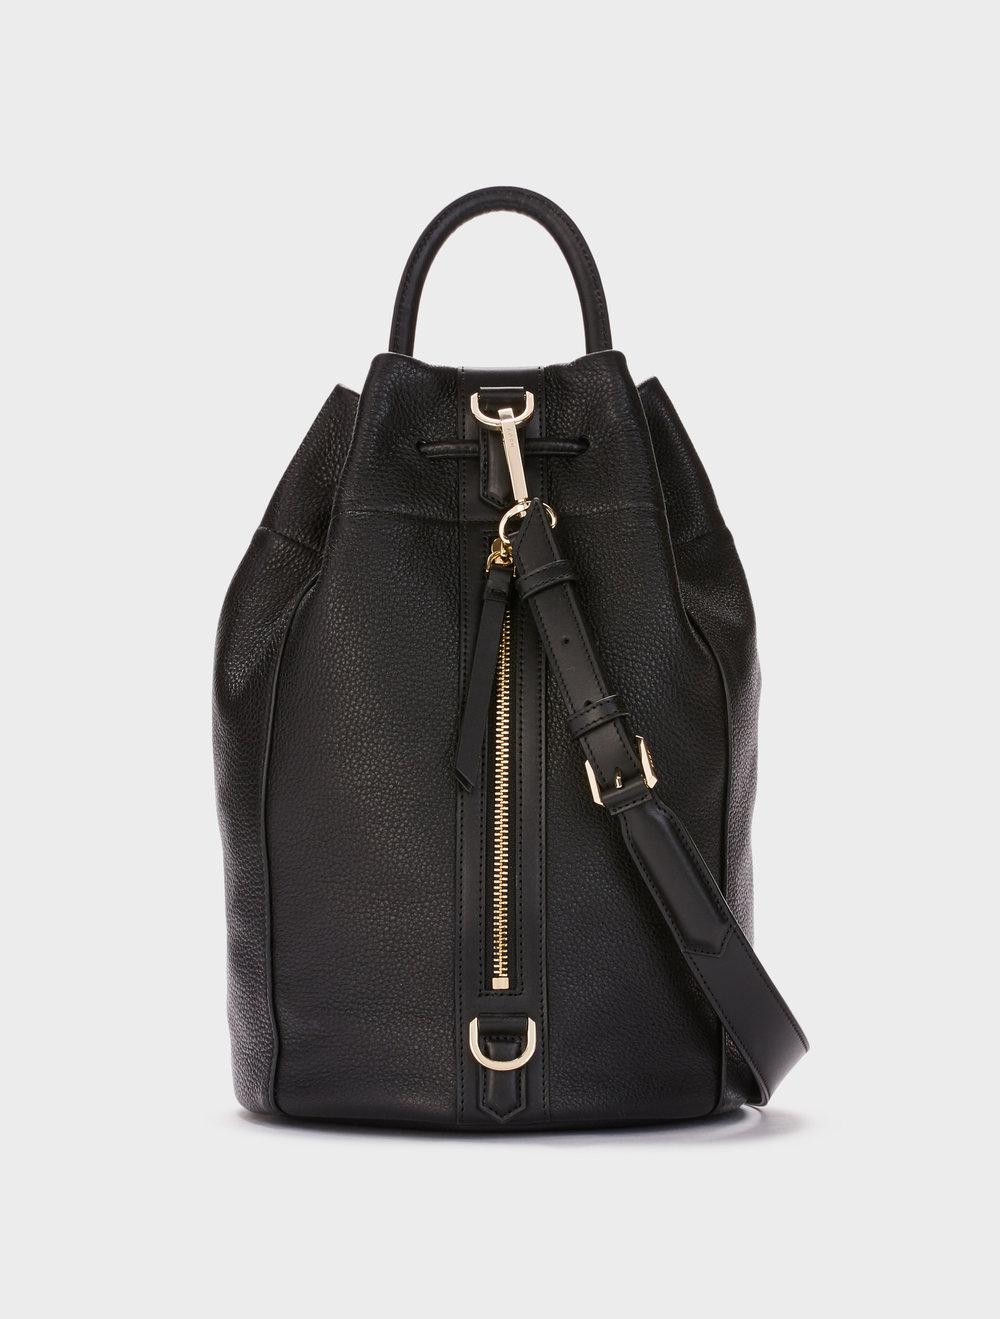 Lyst - Dkny Medium Sling Backpack in Black